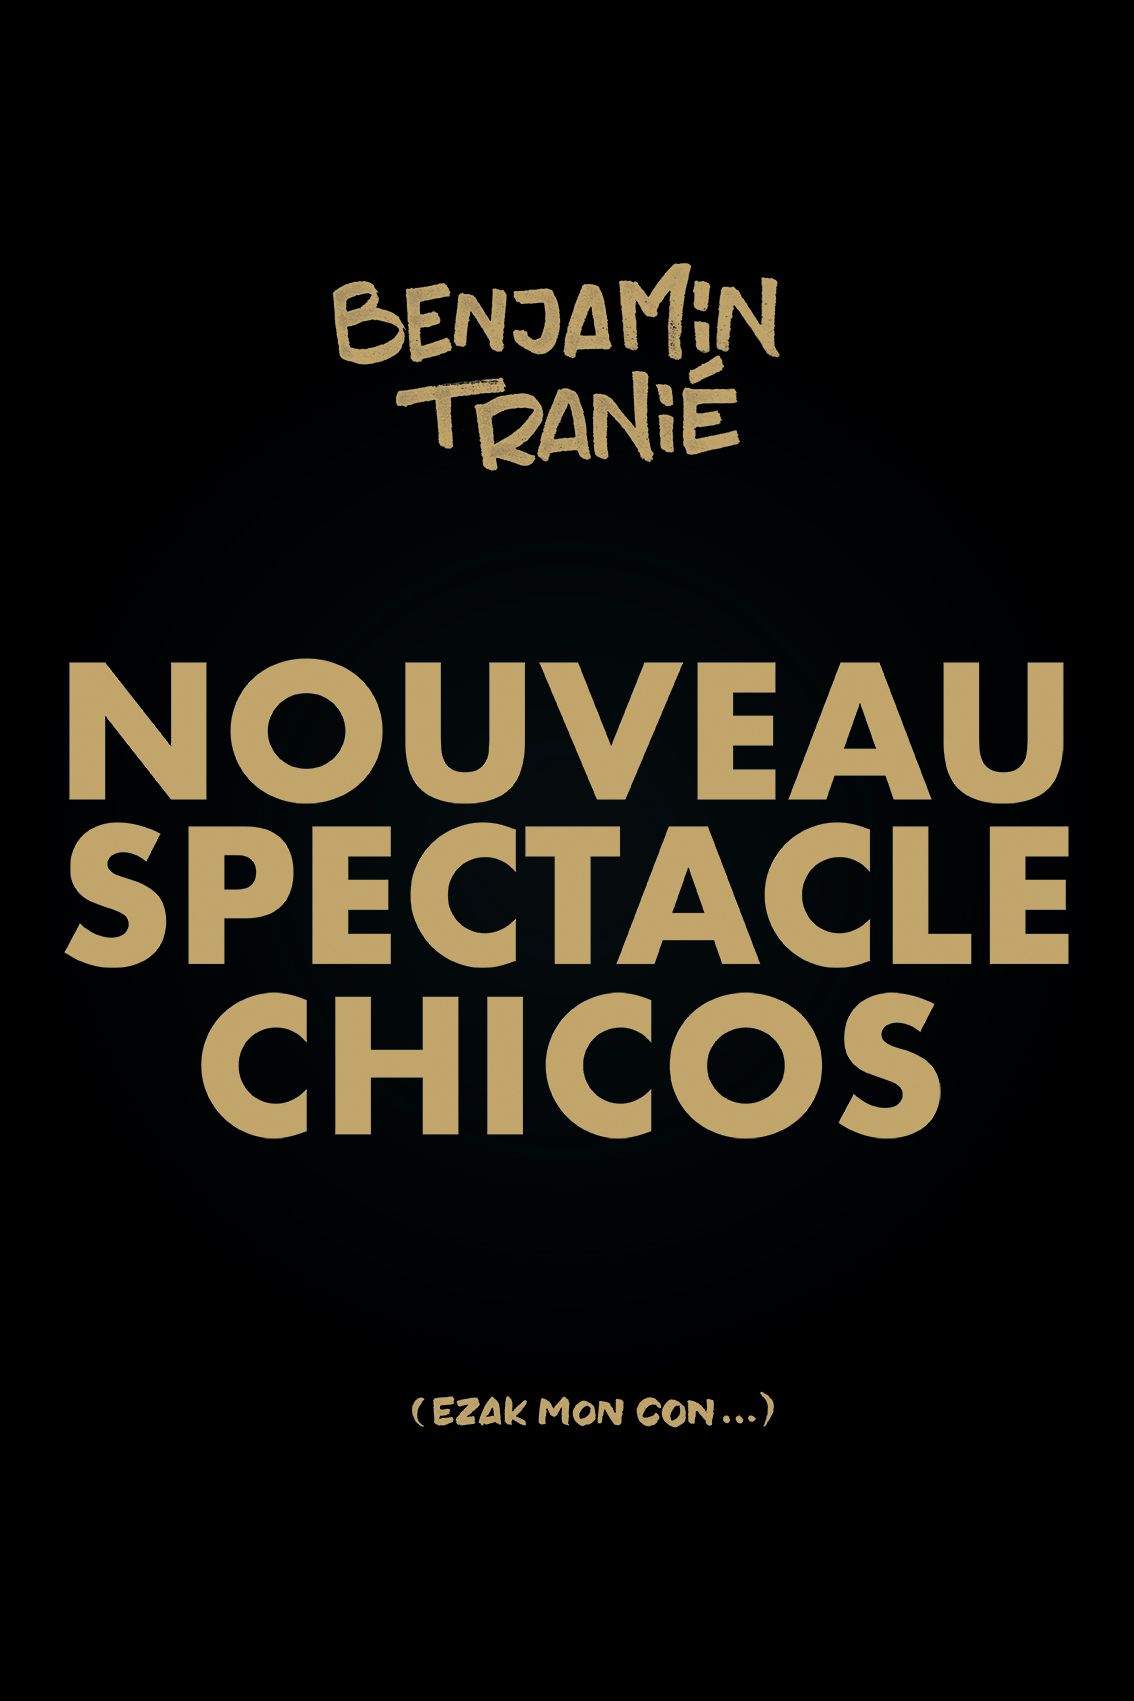 Benjamin Tranié - "Chicos"